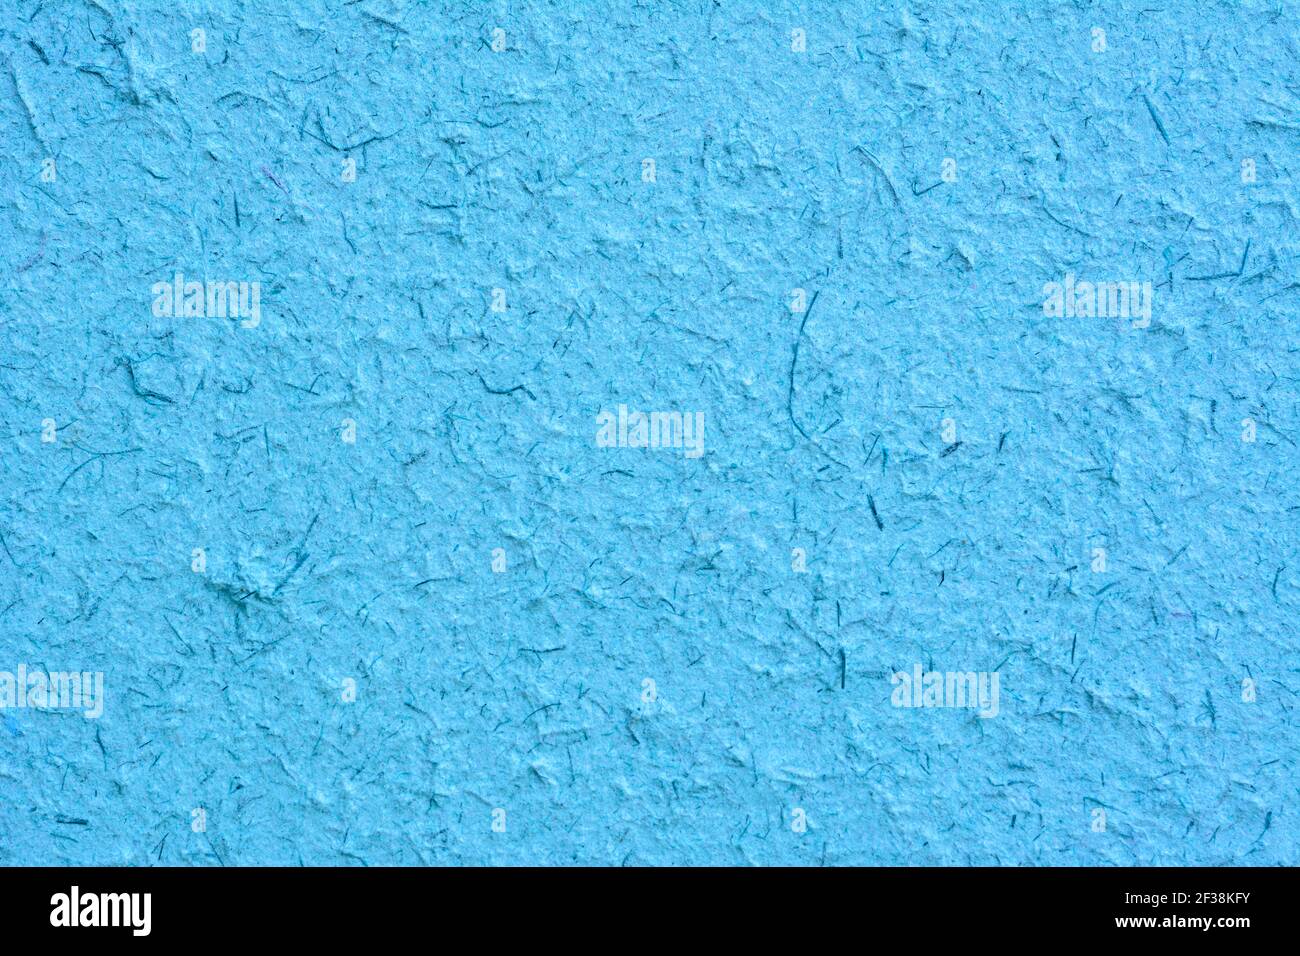 Textura de papel de morera azul para el fondo Foto de stock